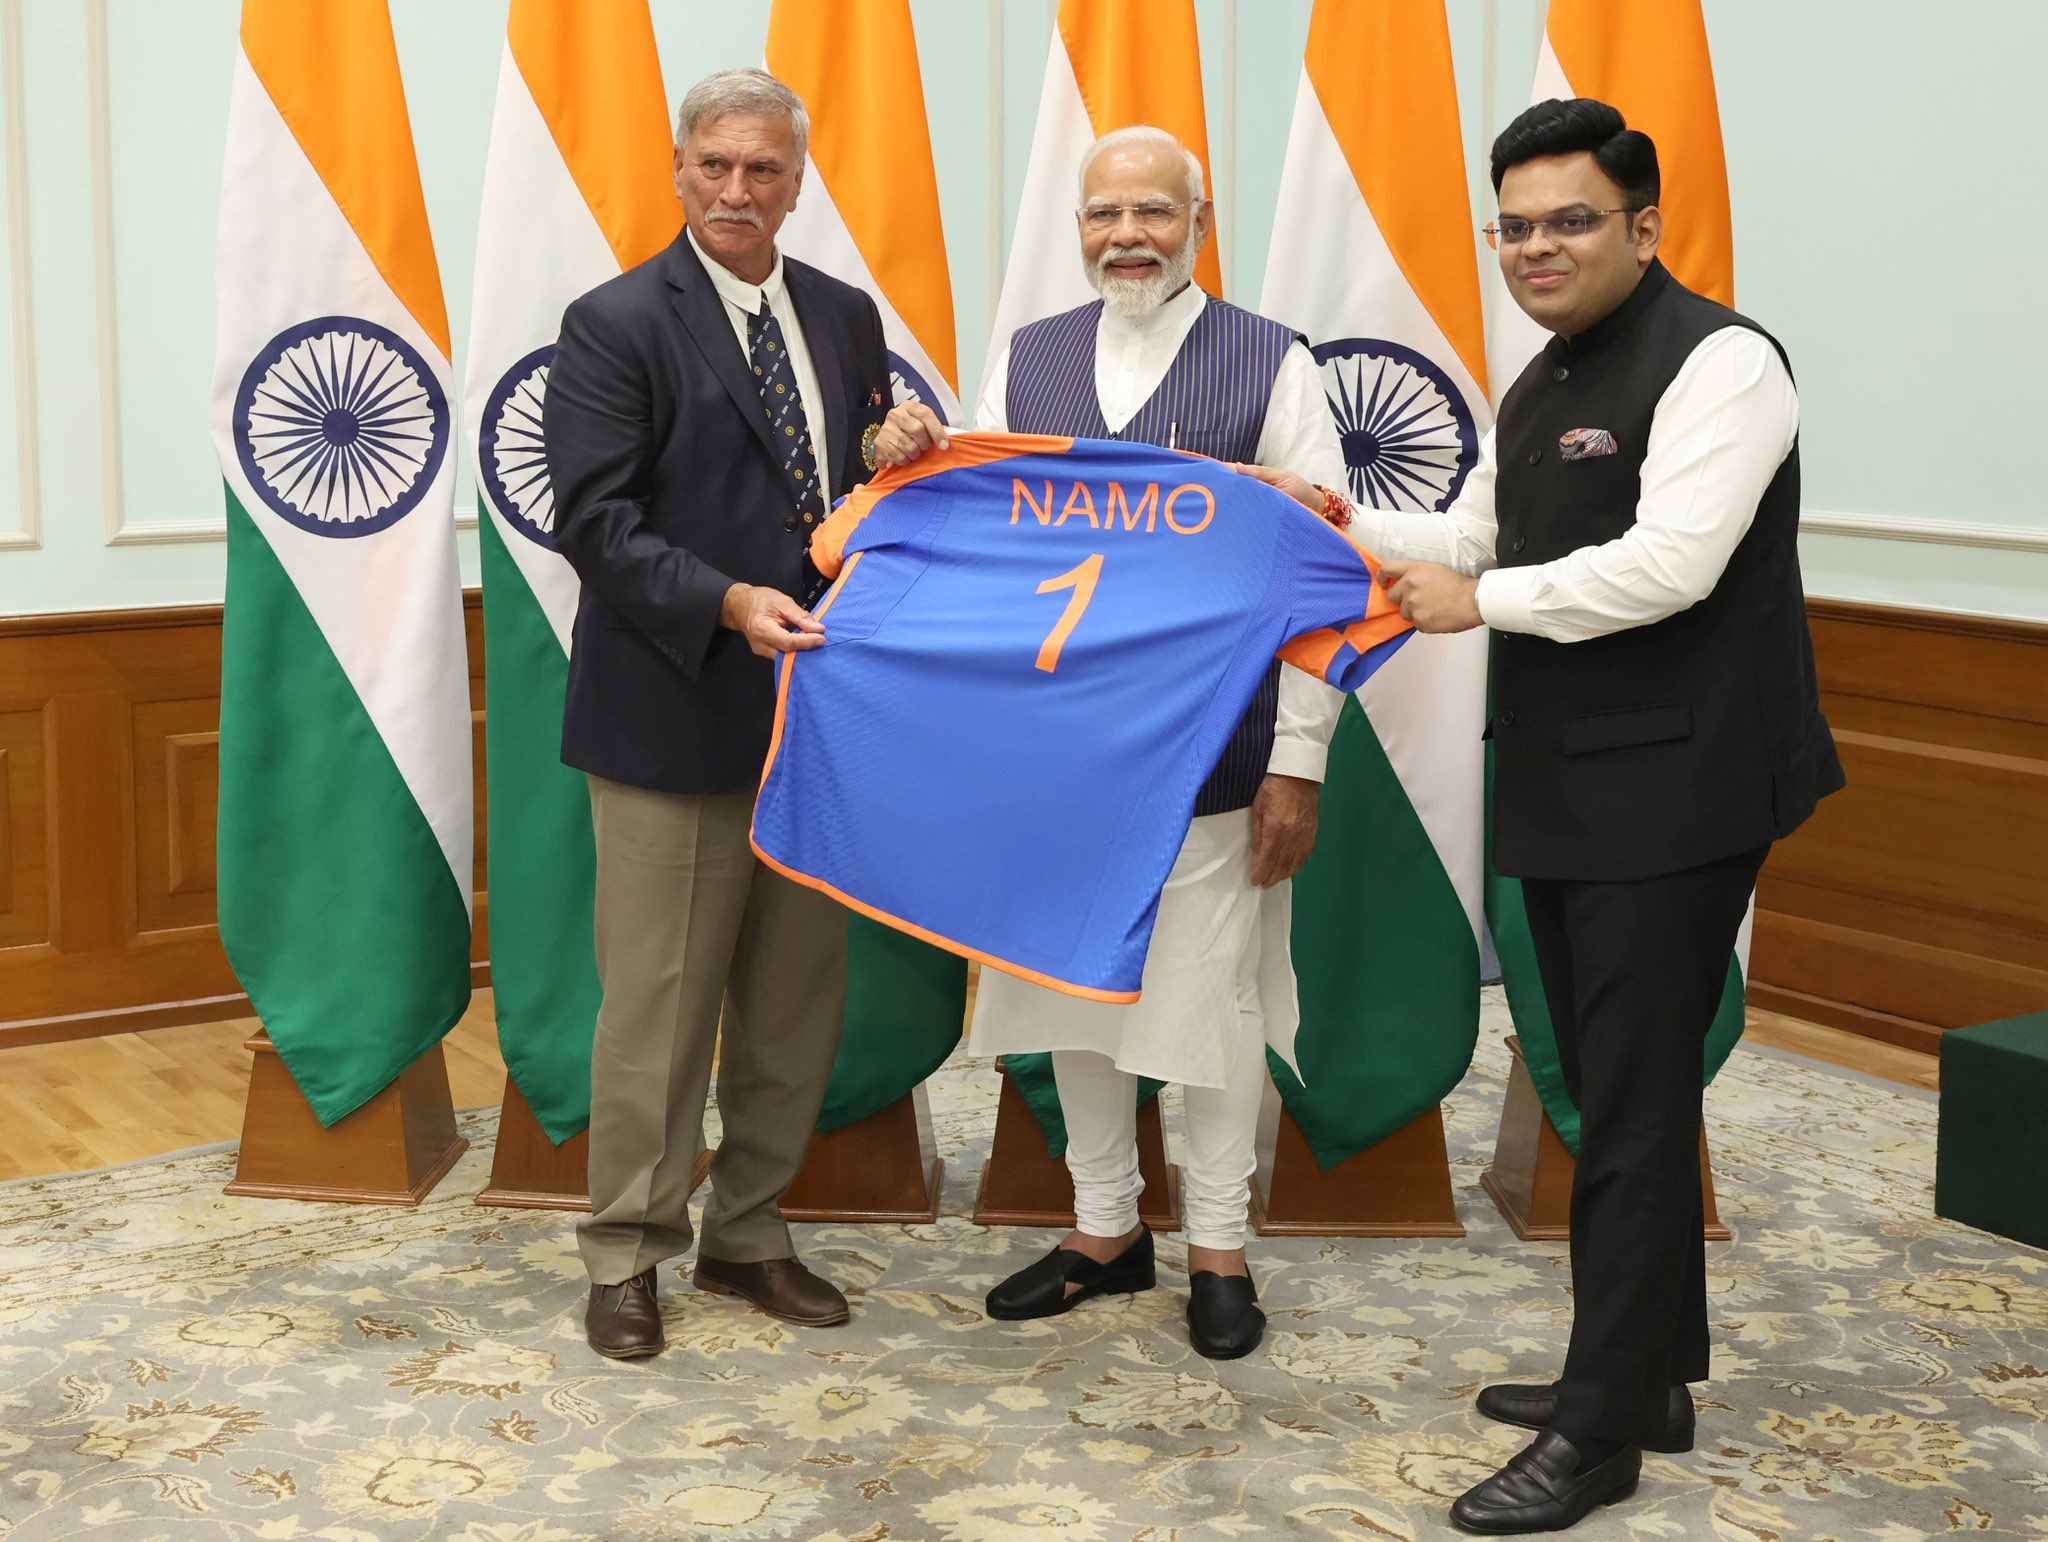 BCCI Secretary Jay Shah and President Roger Binny presented the 'Namo 1' jersey to Prime Minister Narendra Modi. 